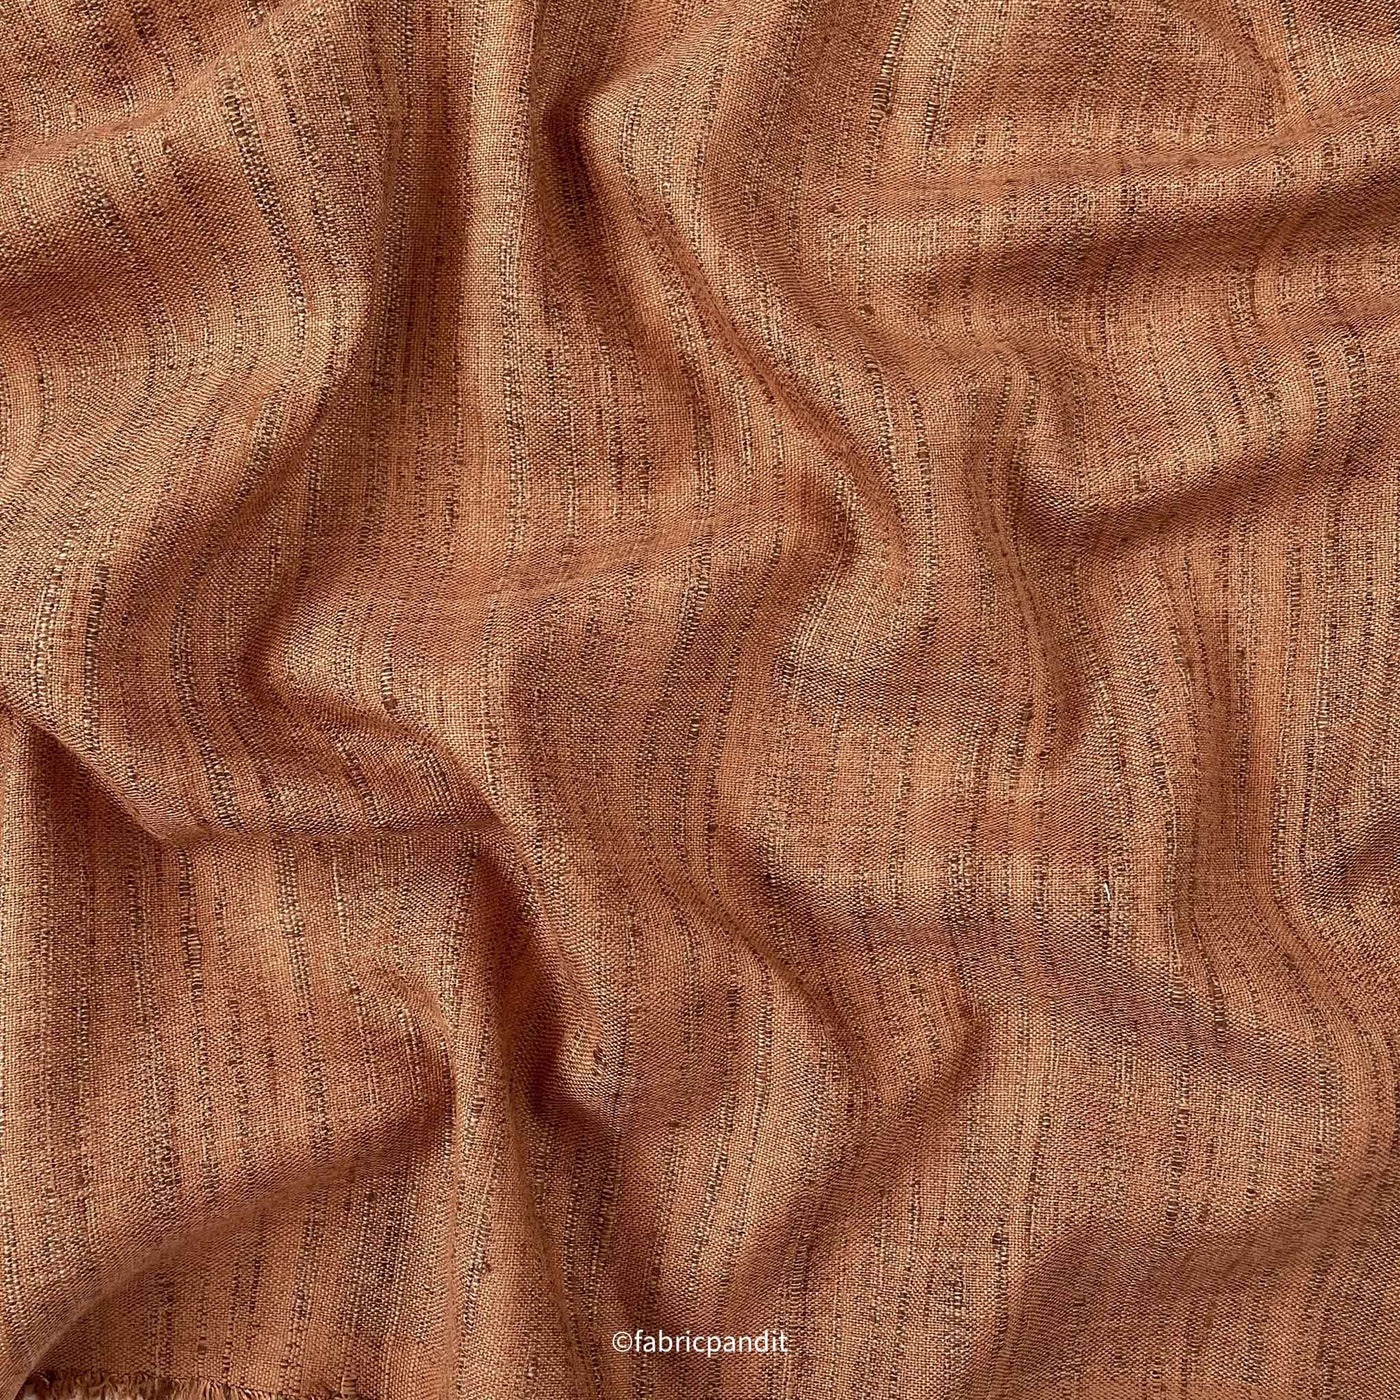 Fabric Pandit Cut Piece (CUT PIECE) Dusty Ocher Color Bhagalpuri Woven Cotton Slub Kurta Fabric (Width 58 Inches)